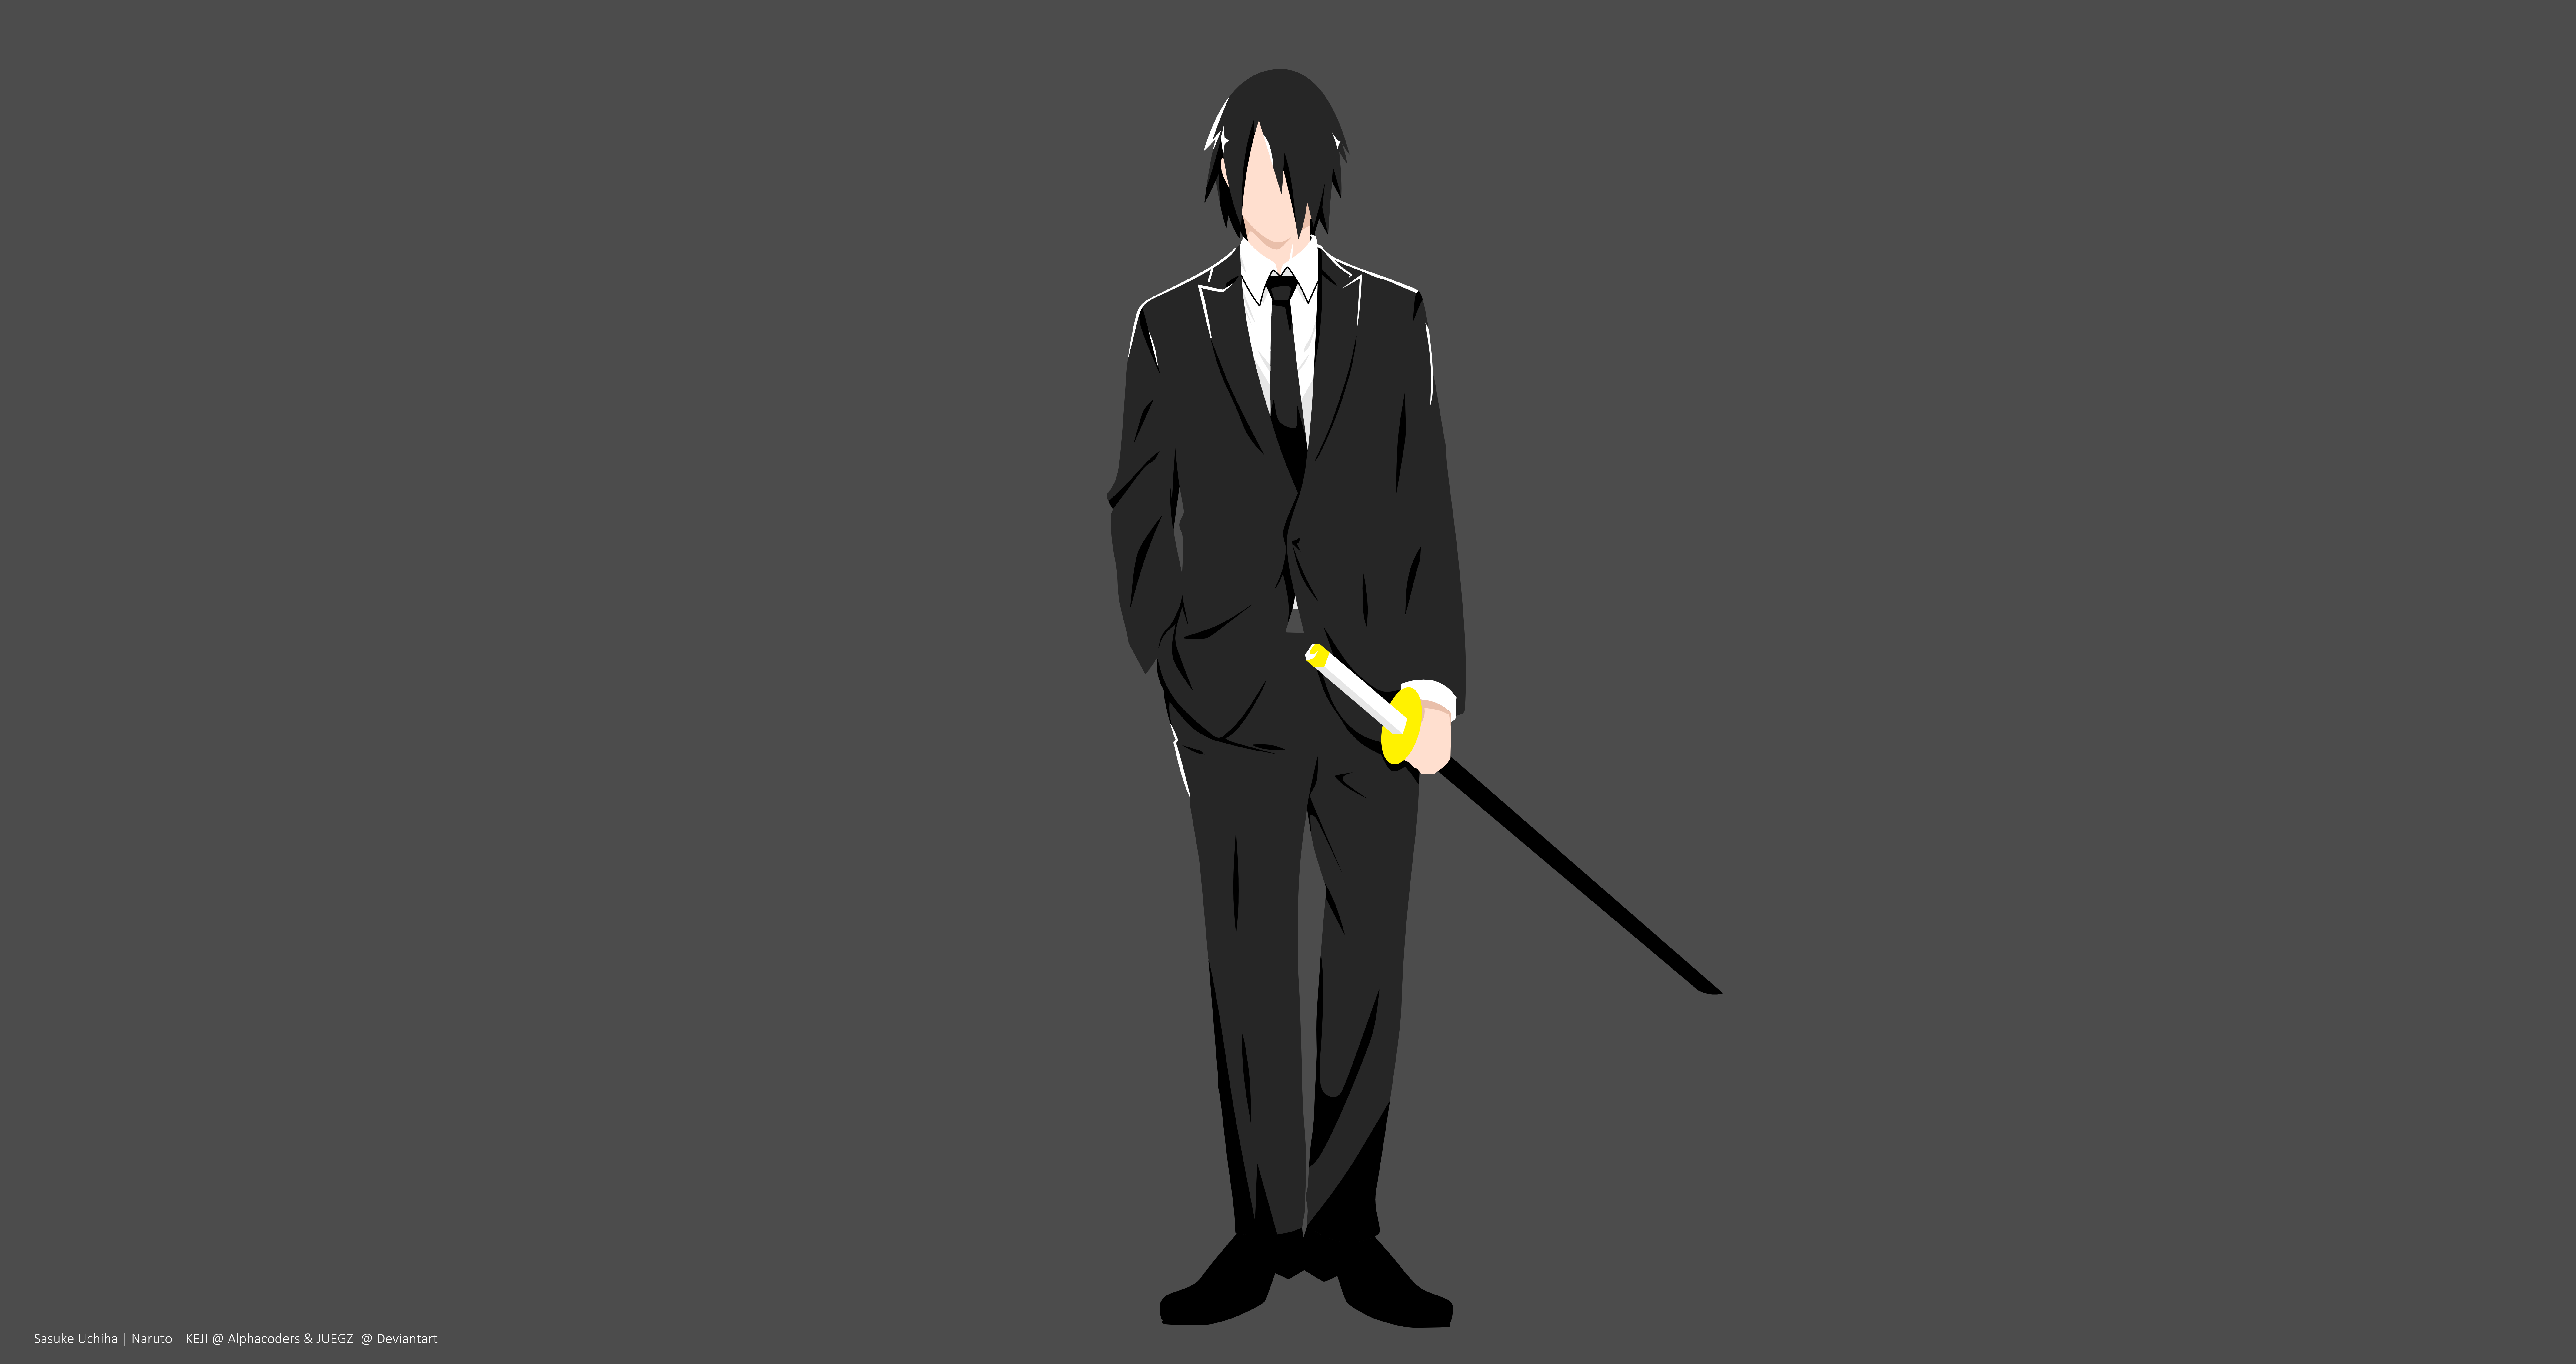 sasuke black outfit wallpaper